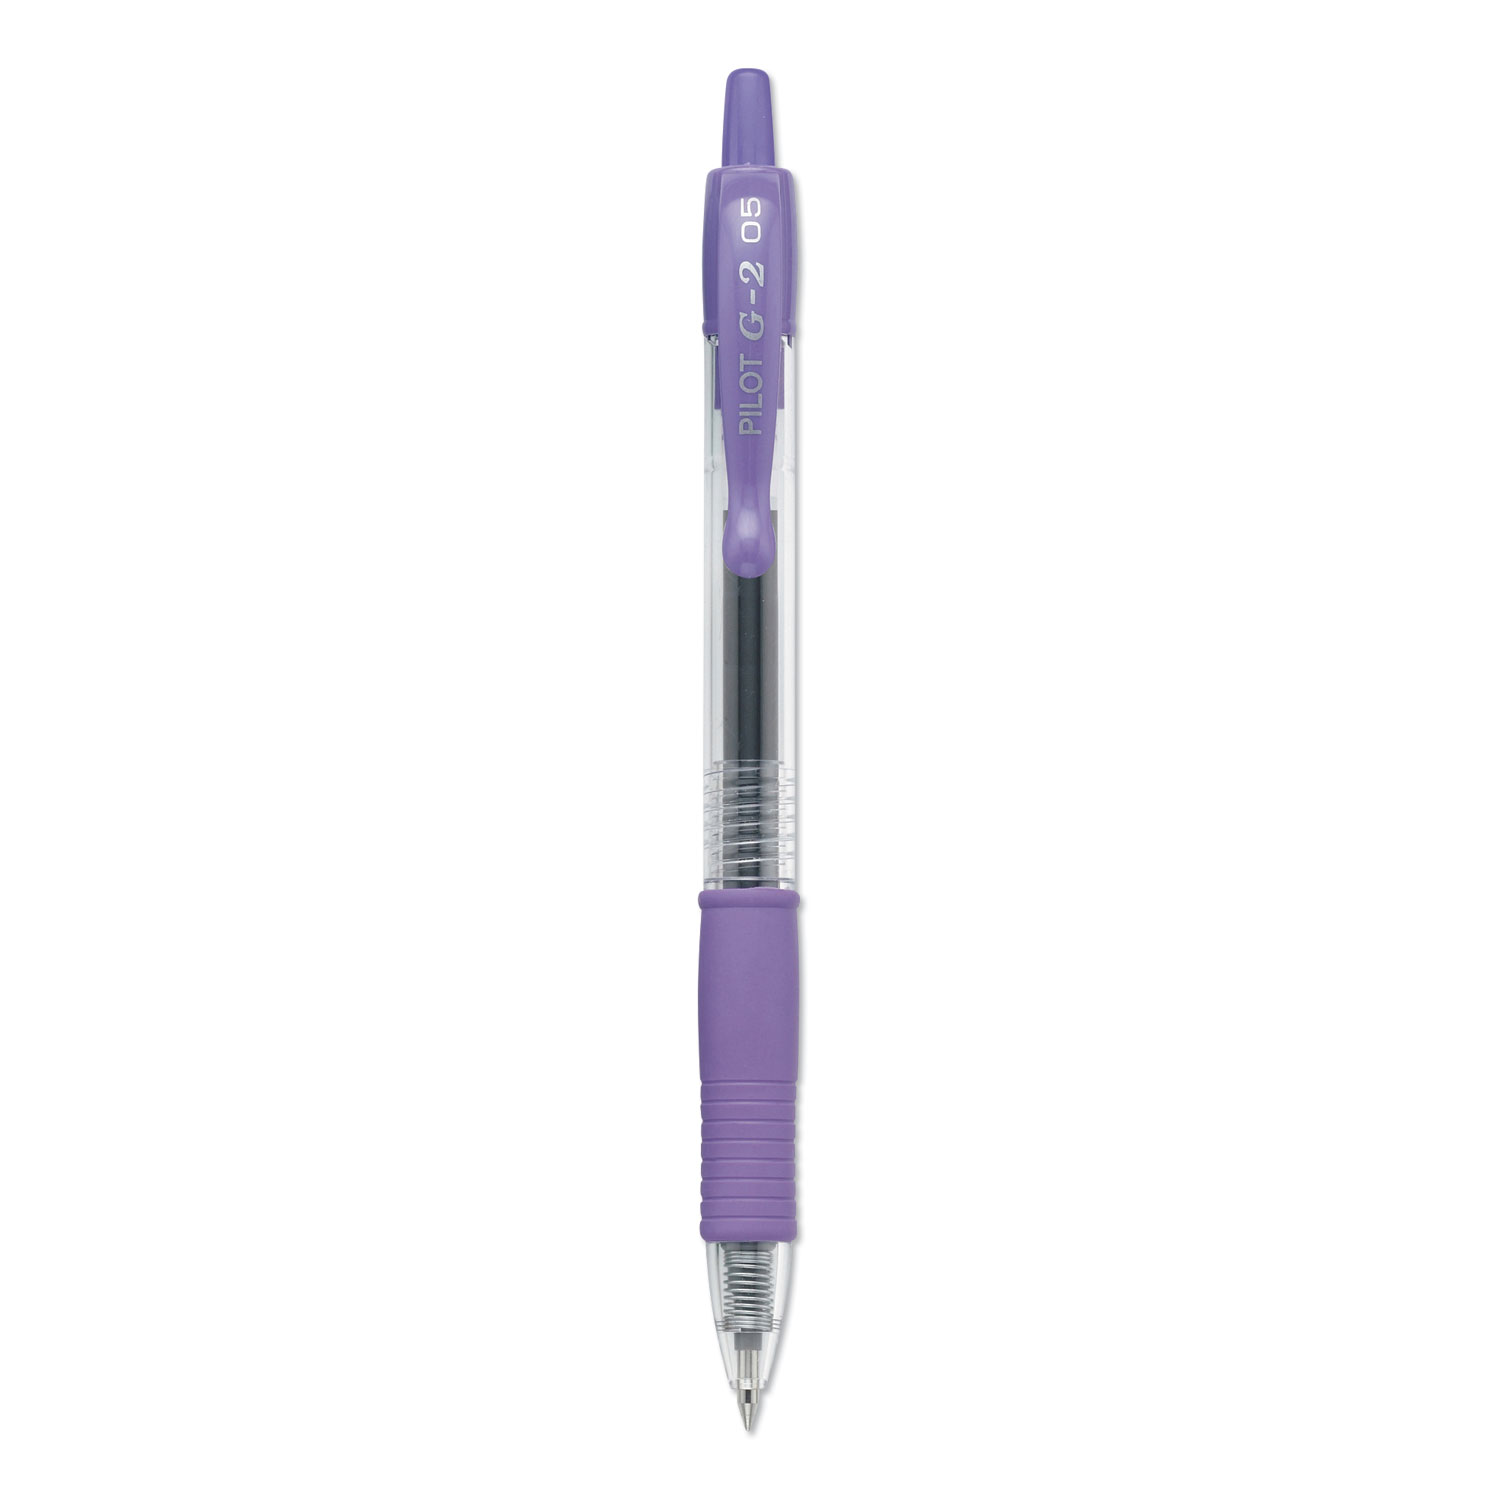 Pilot G2 Retractable Gel Roller Ball Pens, Purple, Extra Fine, 0.5 mm - 12 pack